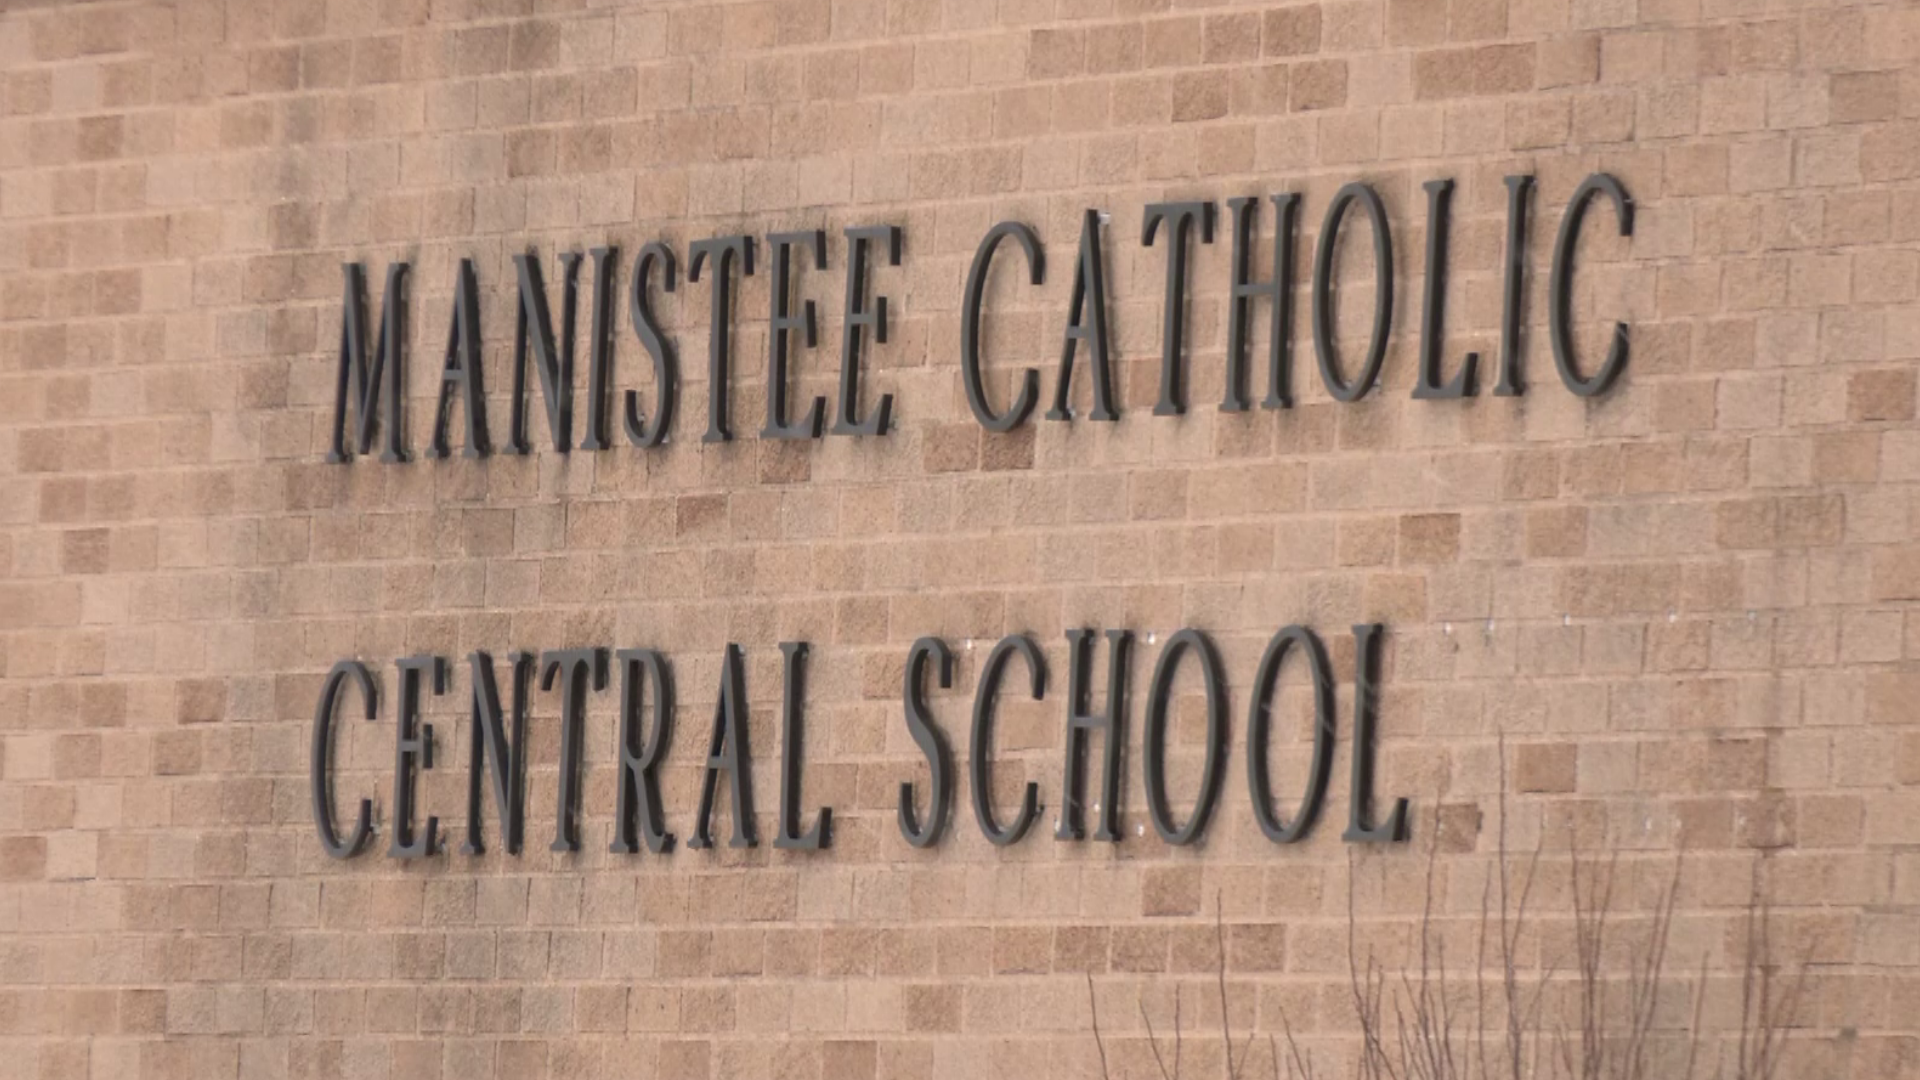 Manistee Catholic Central under threat of closing due to massive budget shortfall